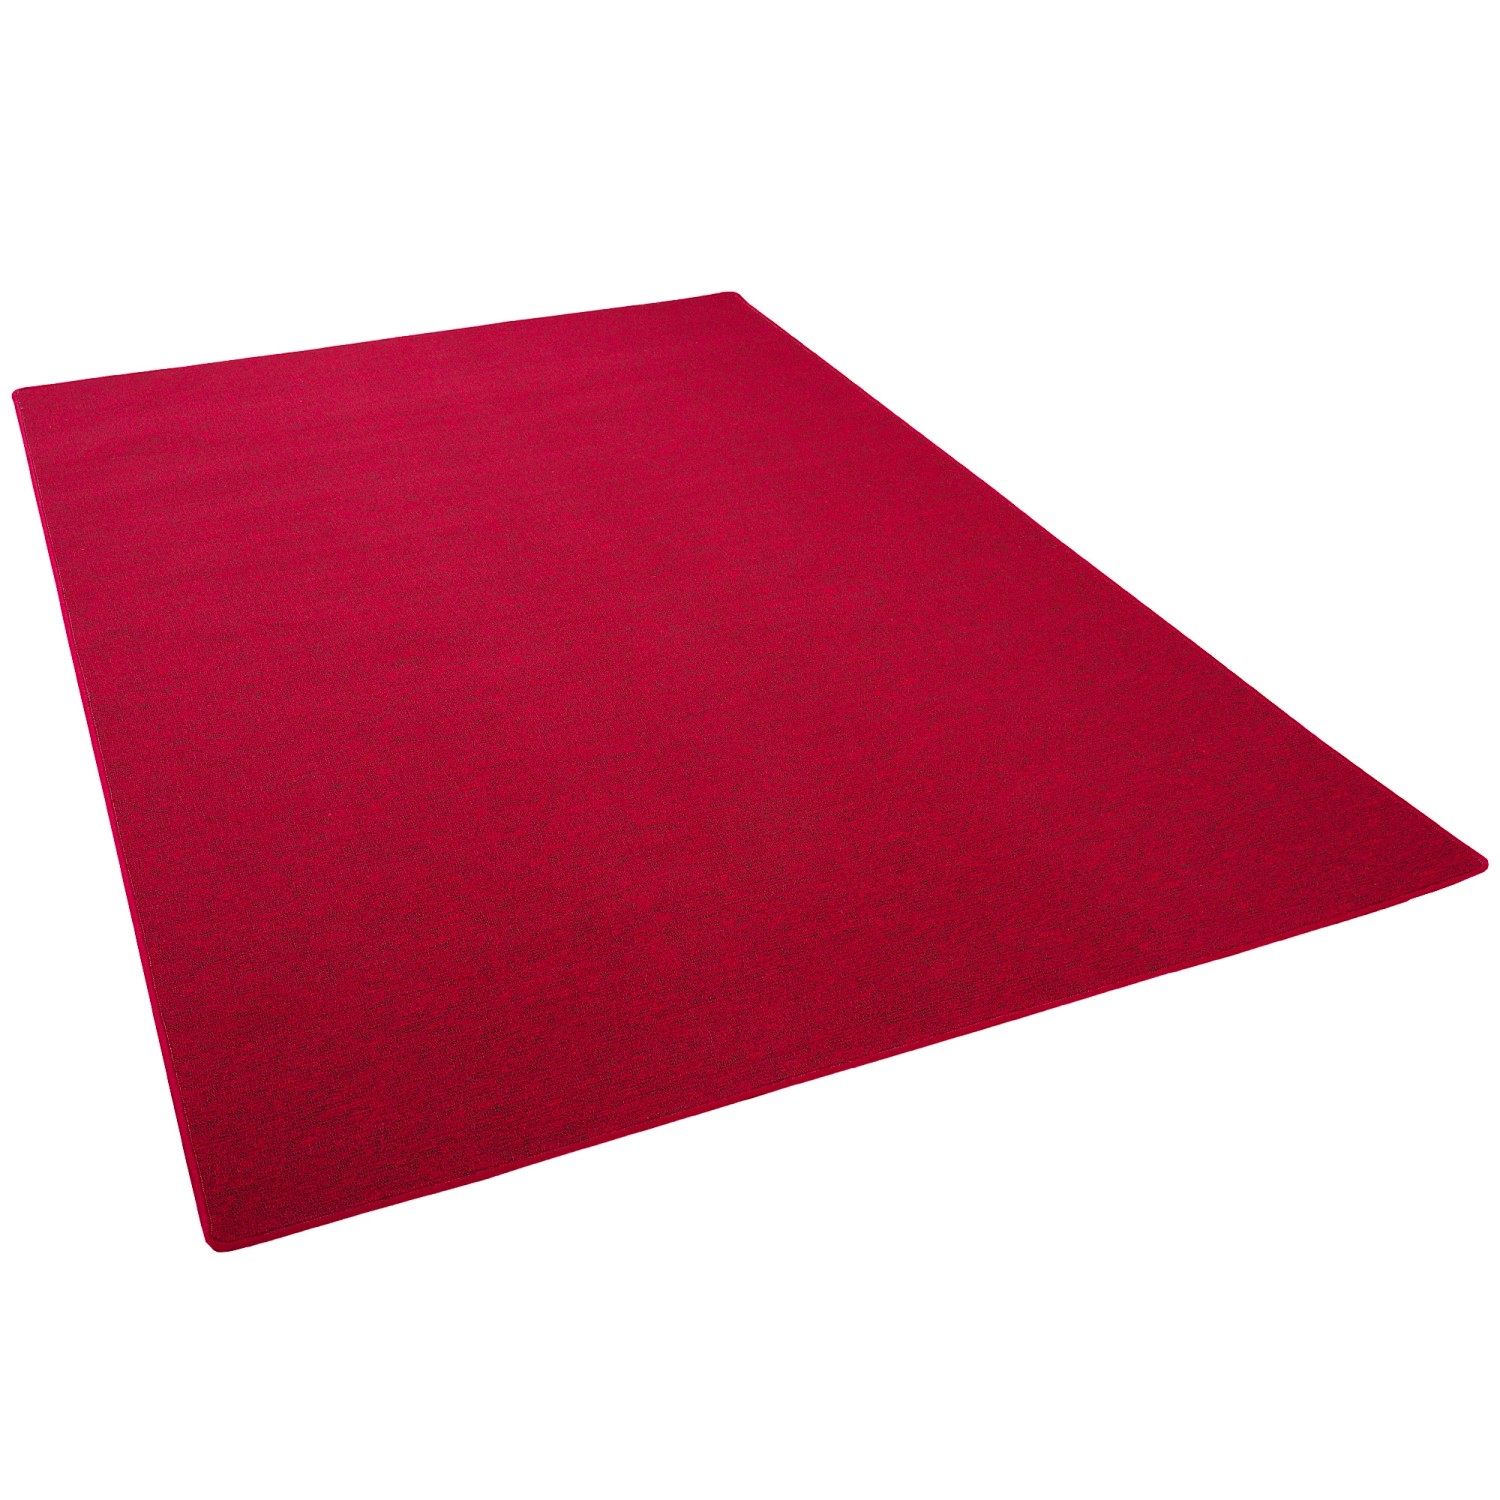 Snapstyle Feinschlingen Velour Teppich Strong Rot 80x200cm günstig online kaufen